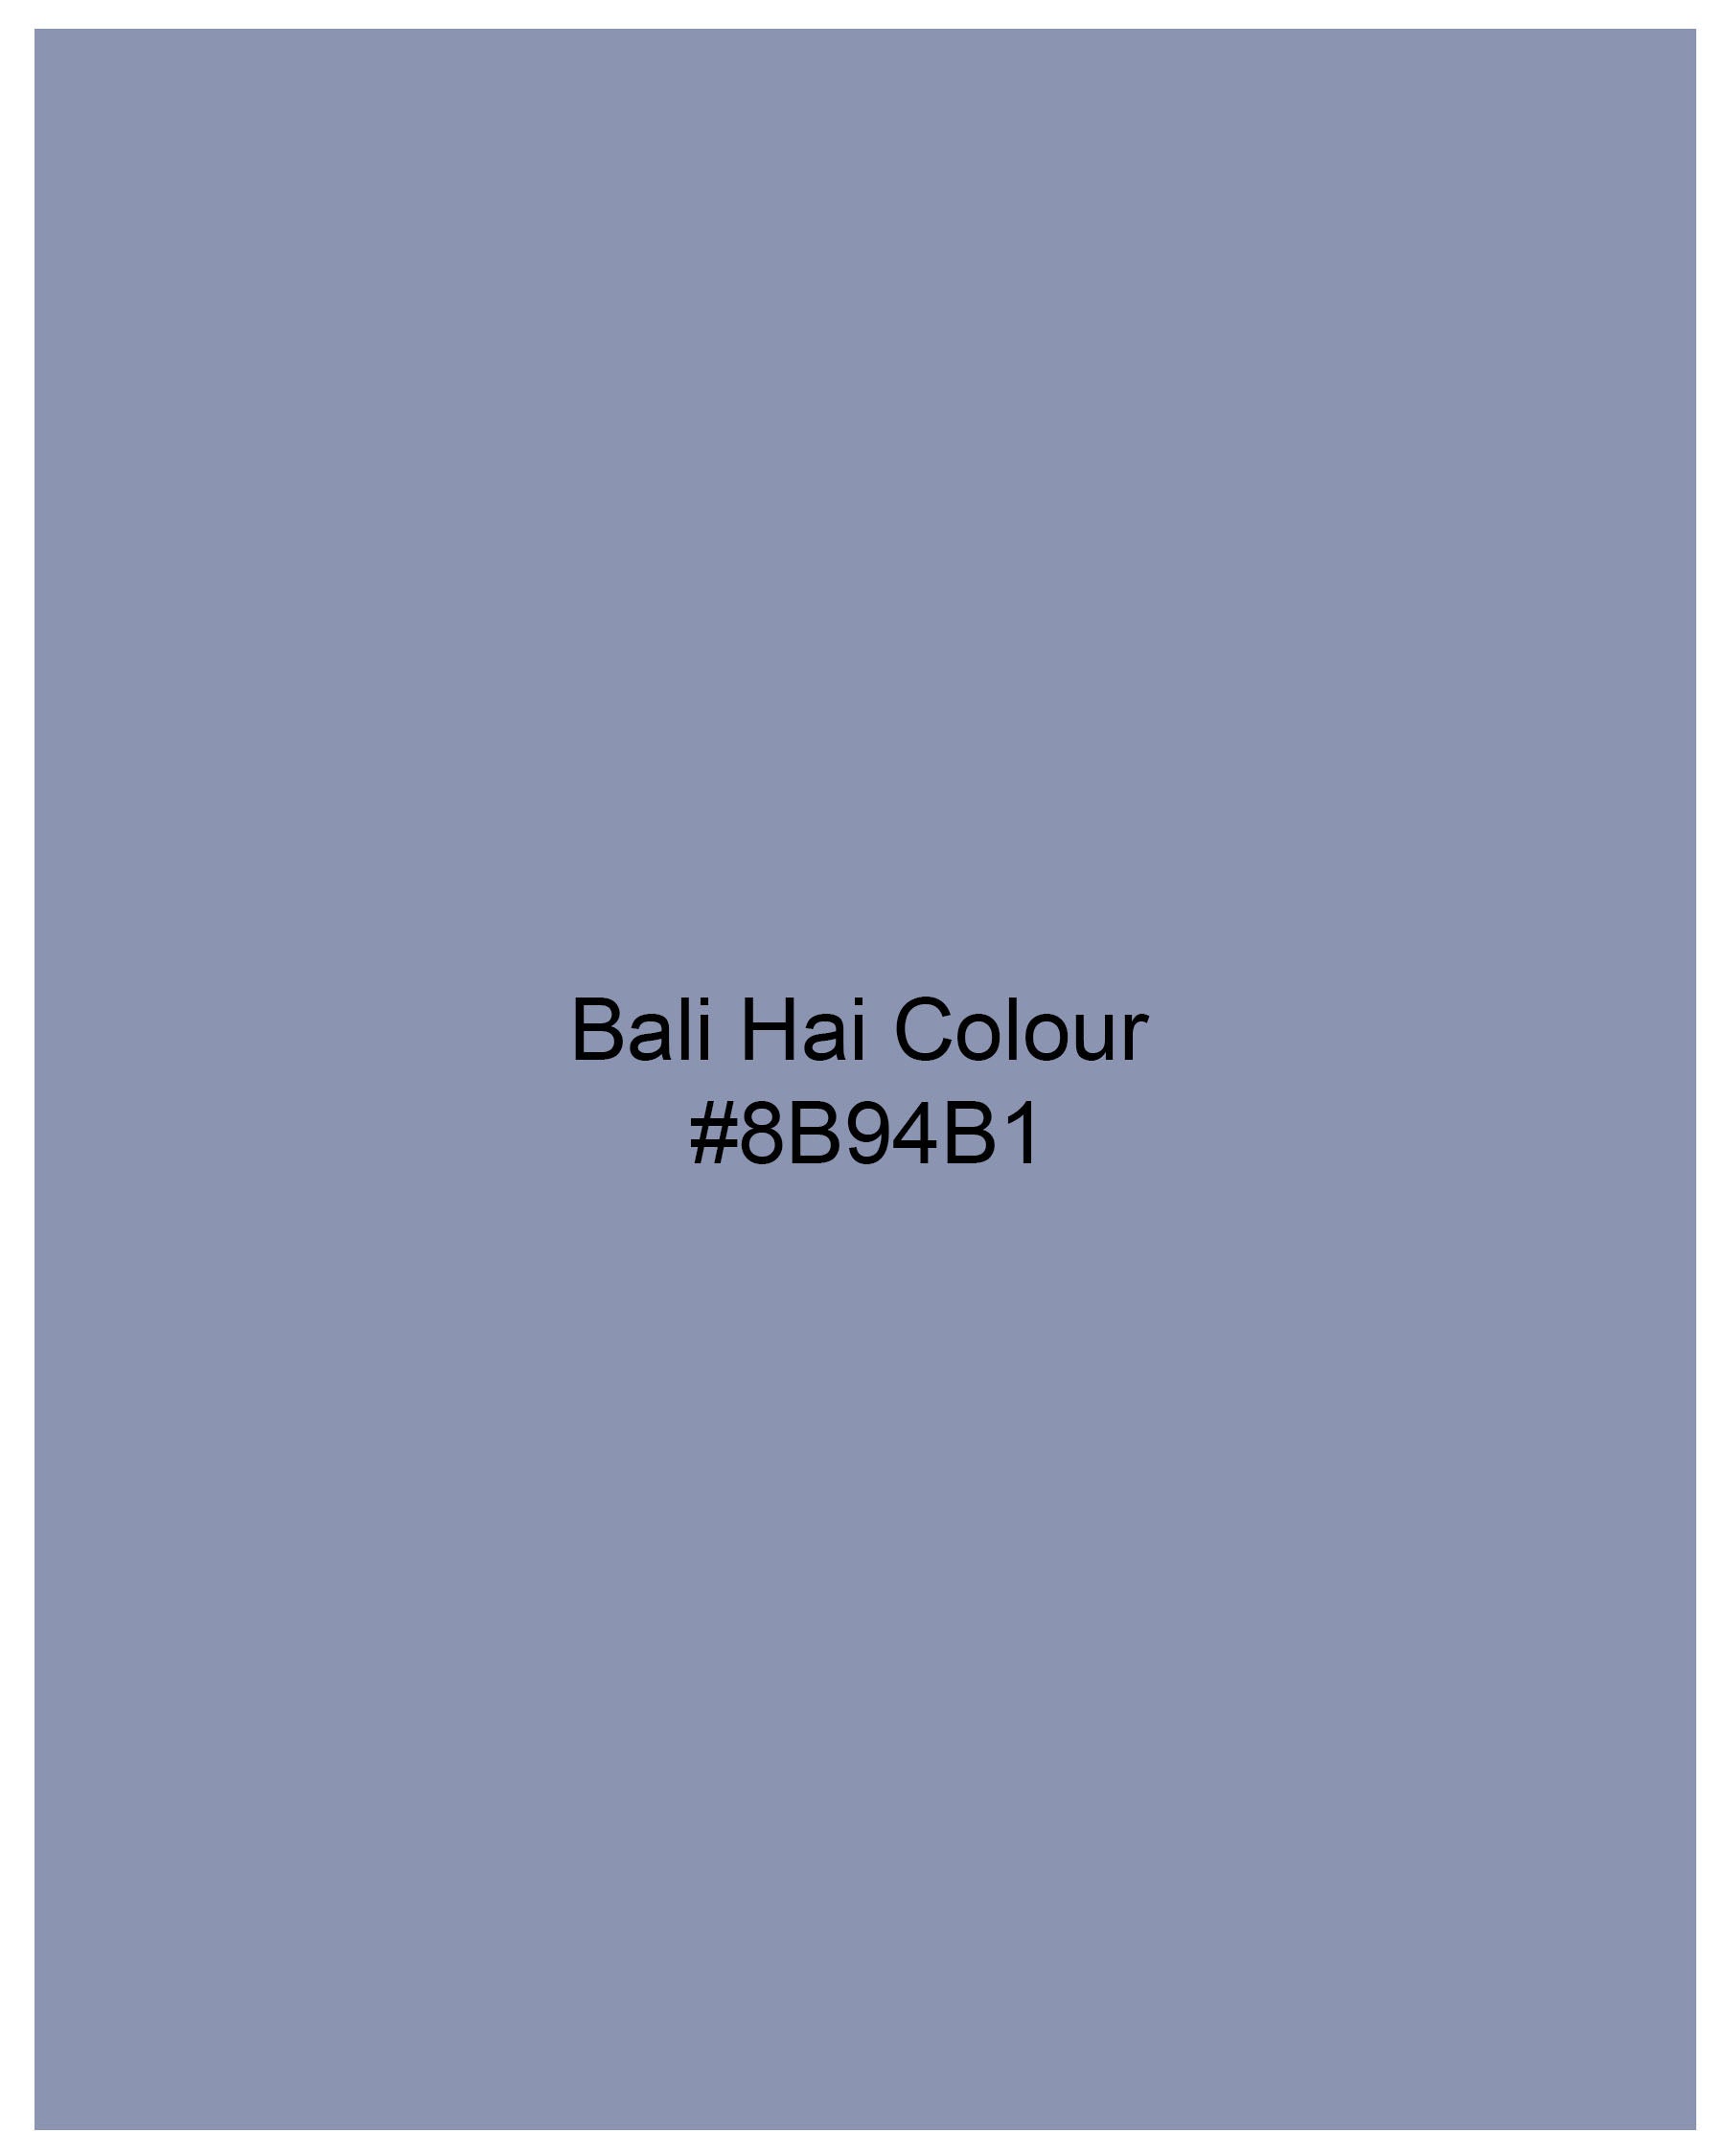 Bali Hai Blue Luxurious Linen Shirt 7864-BLE -38,7864-BLE -H-38,7864-BLE -39,7864-BLE -H-39,7864-BLE -40,7864-BLE -H-40,7864-BLE -42,7864-BLE -H-42,7864-BLE -44,7864-BLE -H-44,7864-BLE -46,7864-BLE -H-46,7864-BLE -48,7864-BLE -H-48,7864-BLE -50,7864-BLE -H-50,7864-BLE -52,7864-BLE -H-52